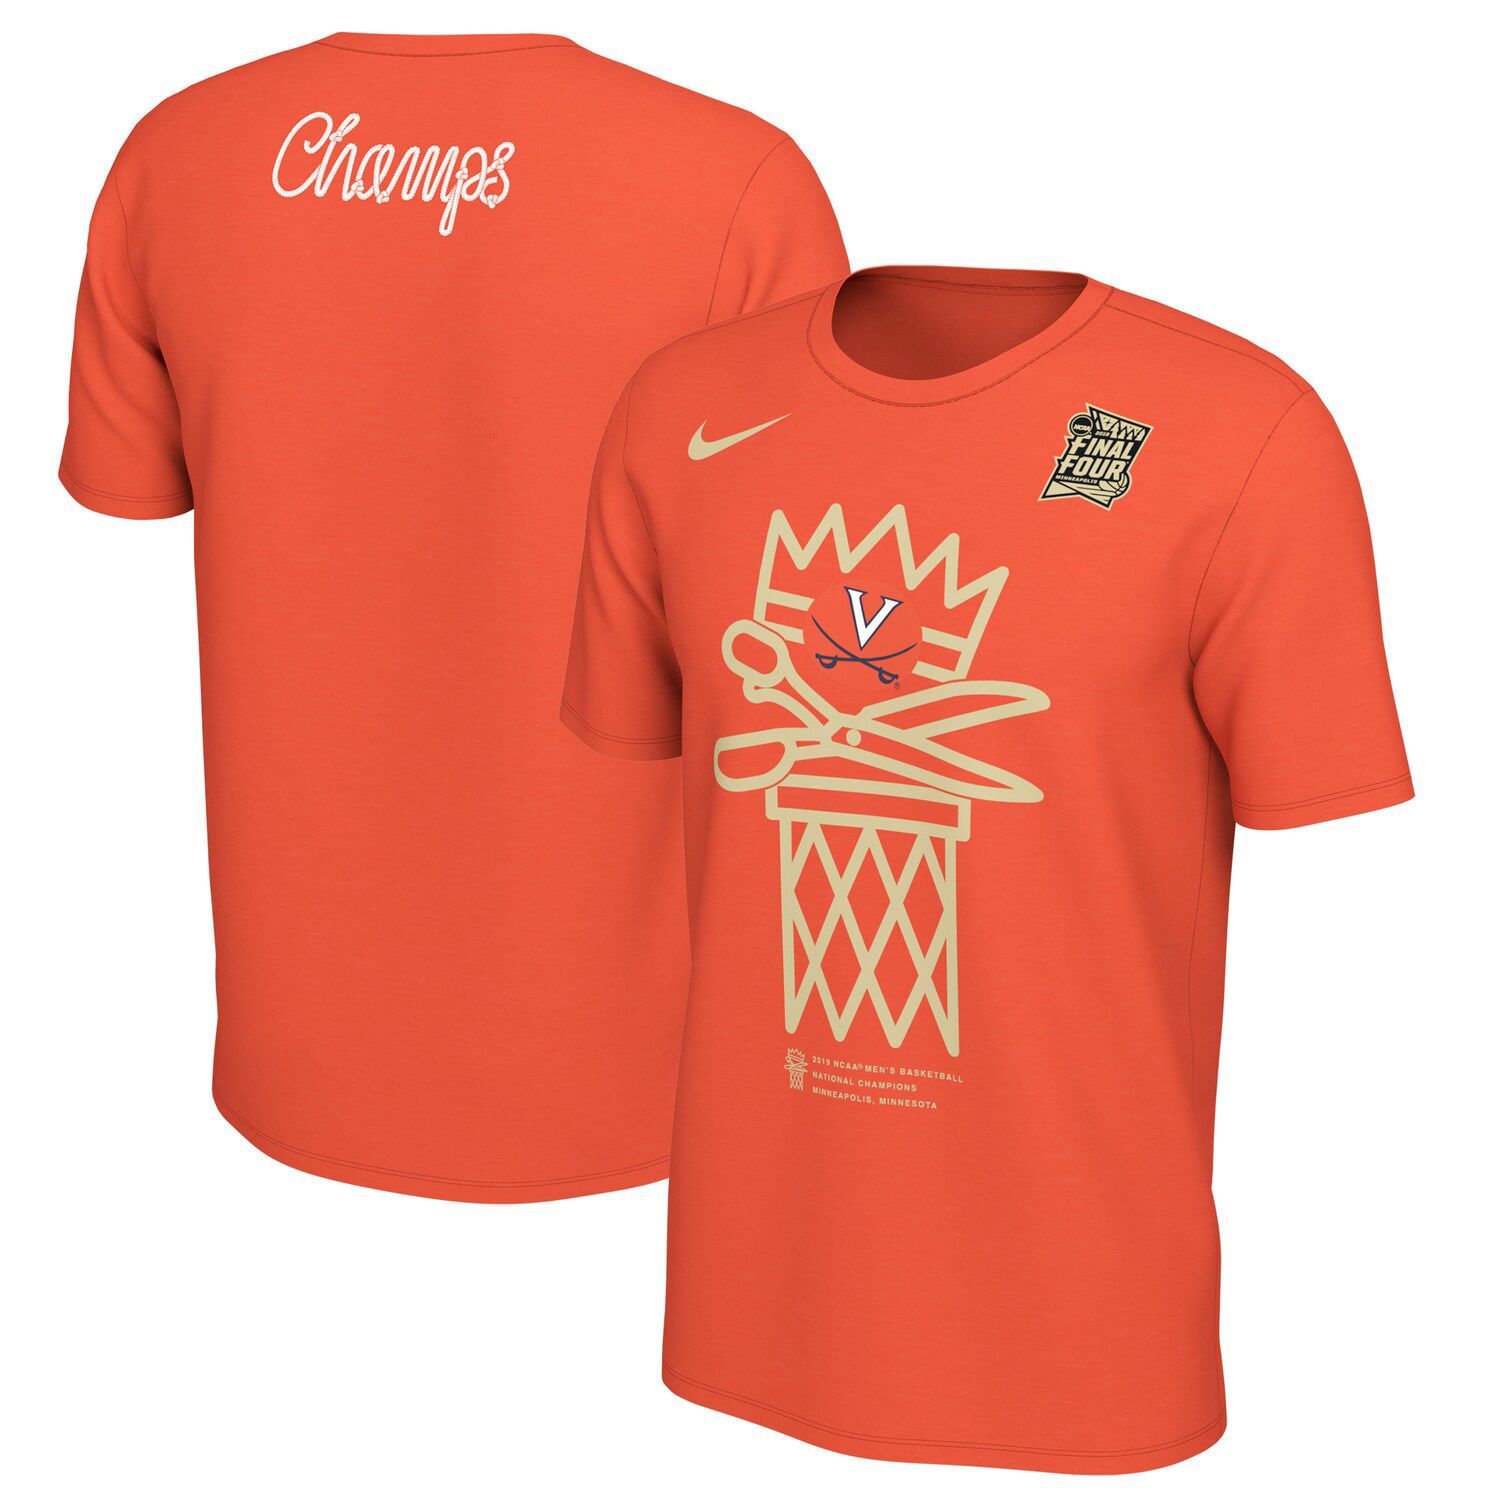 virginia cavaliers championship shirt